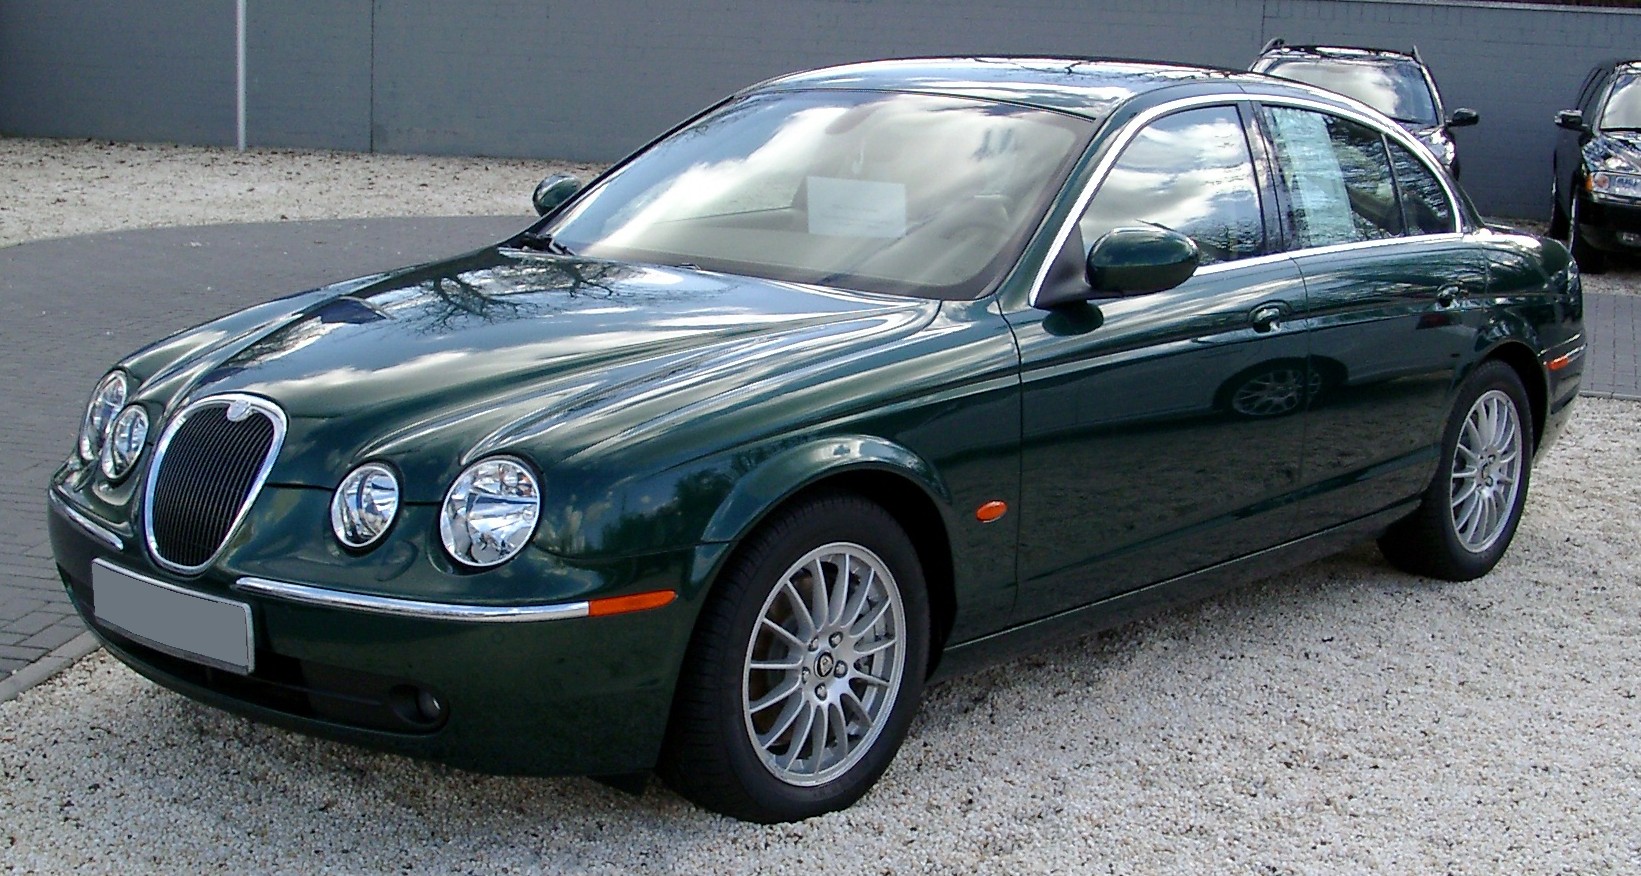 File:Jaguar S-Type front 20080202.jpg - Wikimedia Commons